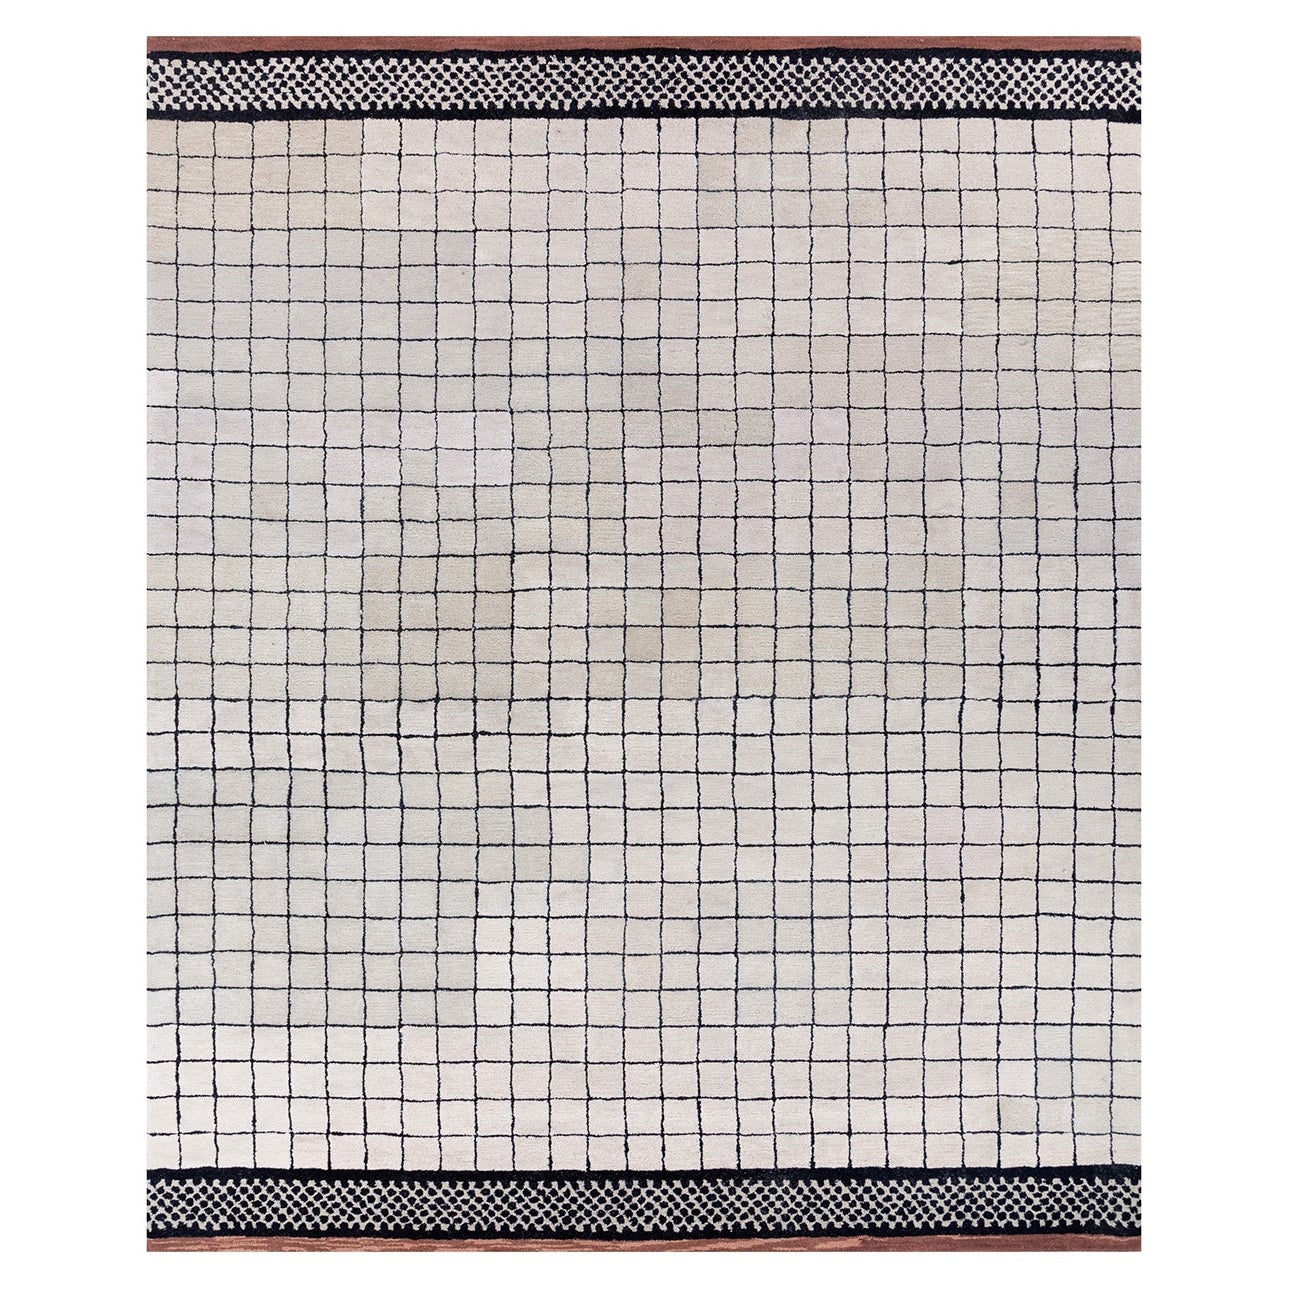 Mozaic Rug by Rural Weavers, Tufted, Wool, Viscose, 240x300cm